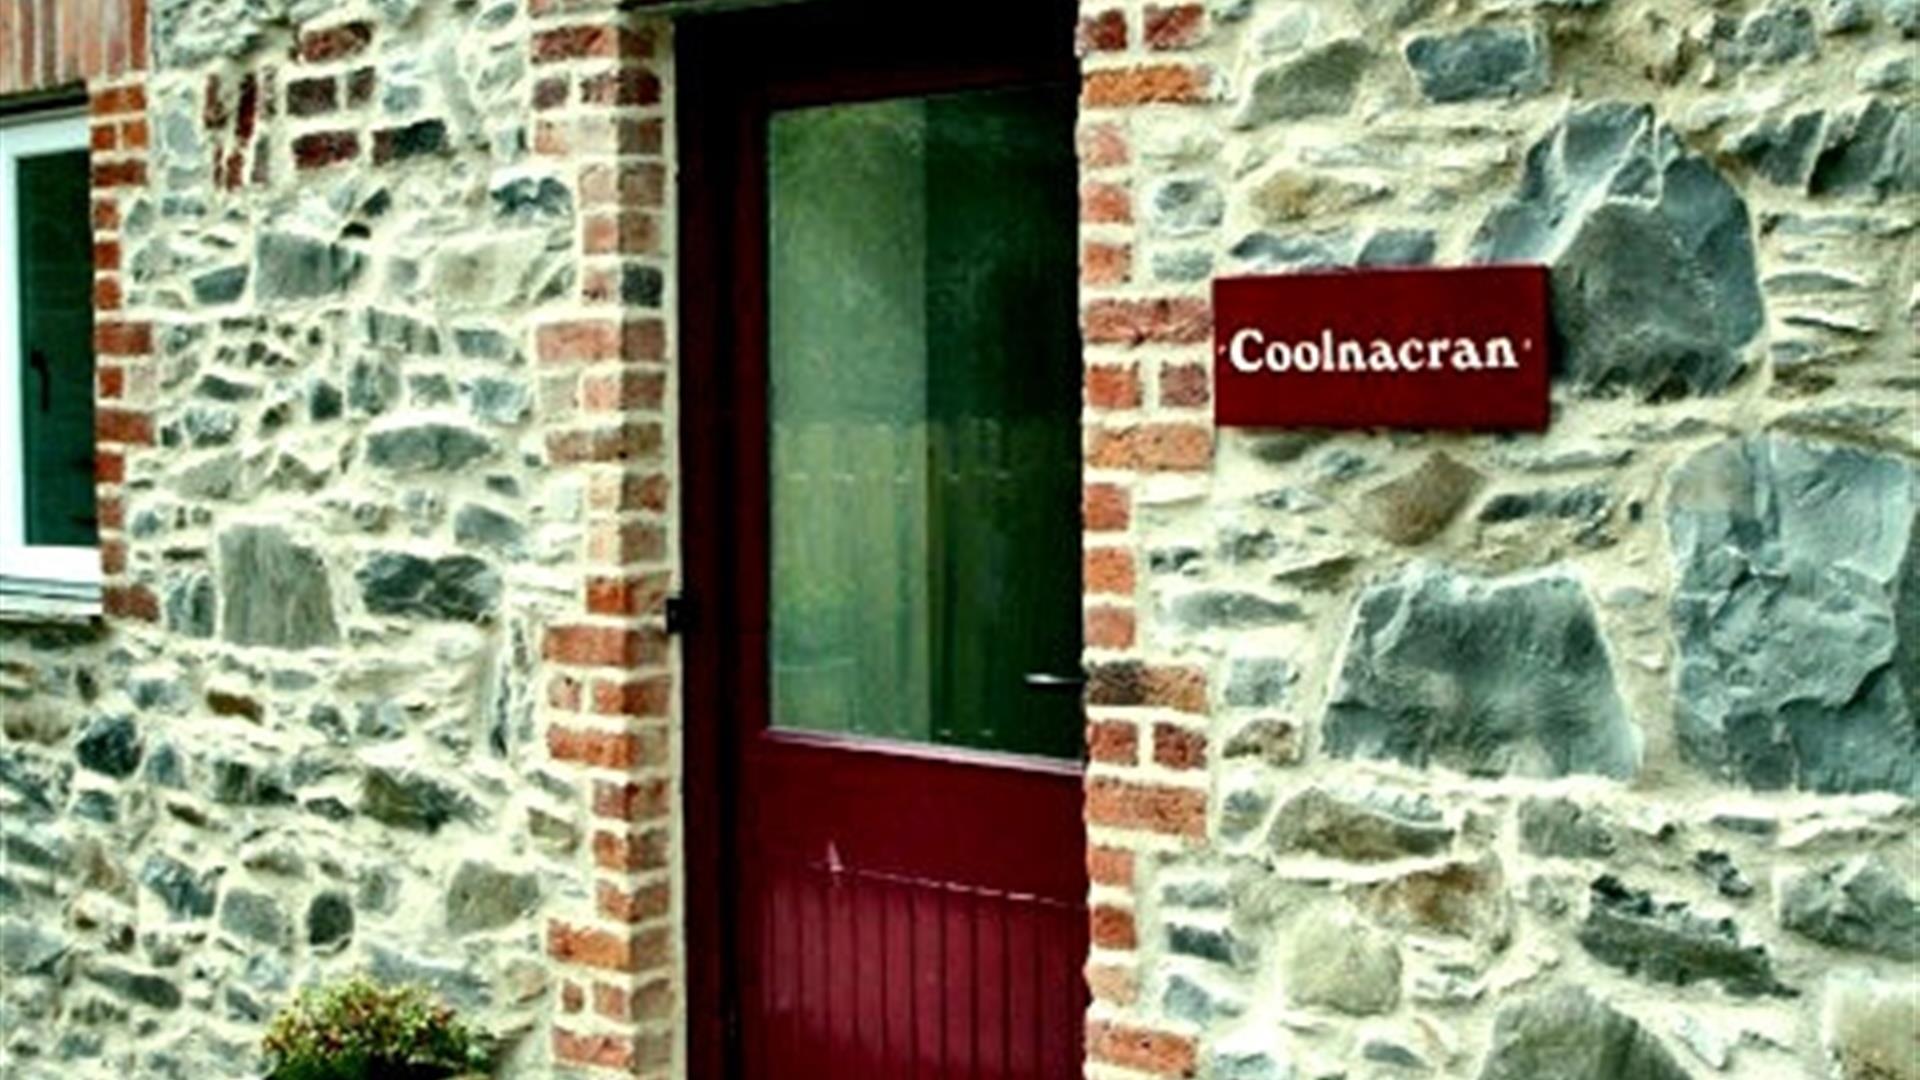 Loughbrickland Courtyard - Coolnacran